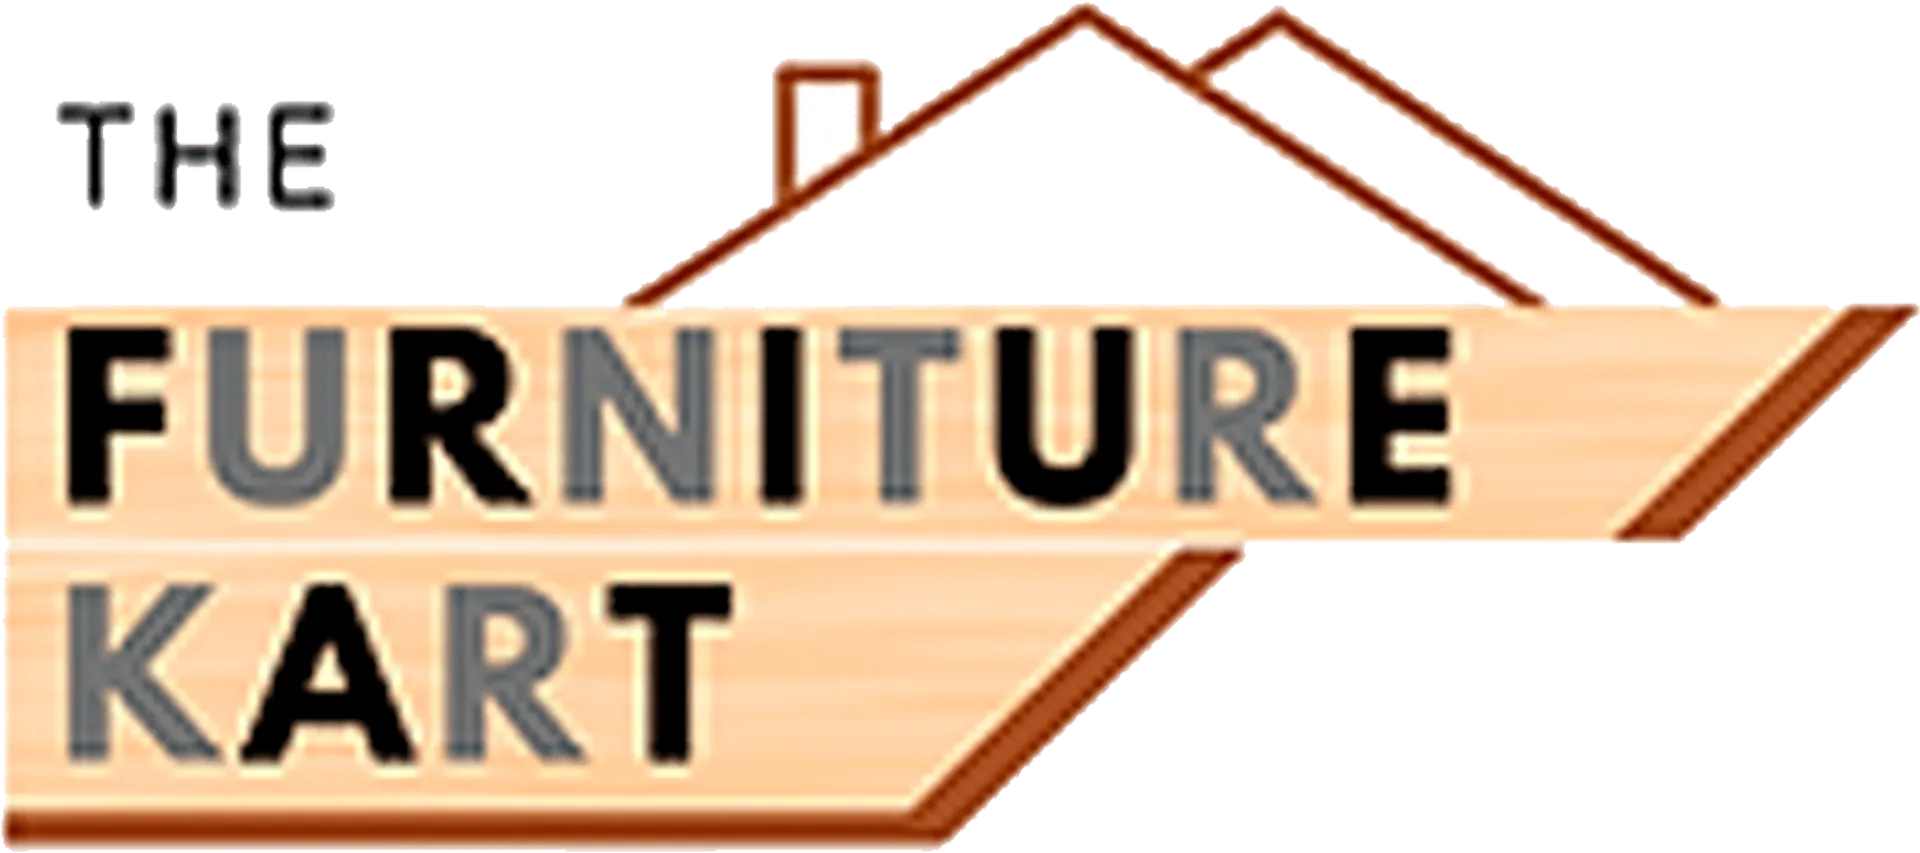 FURNITURE KART logo. Current catalogue